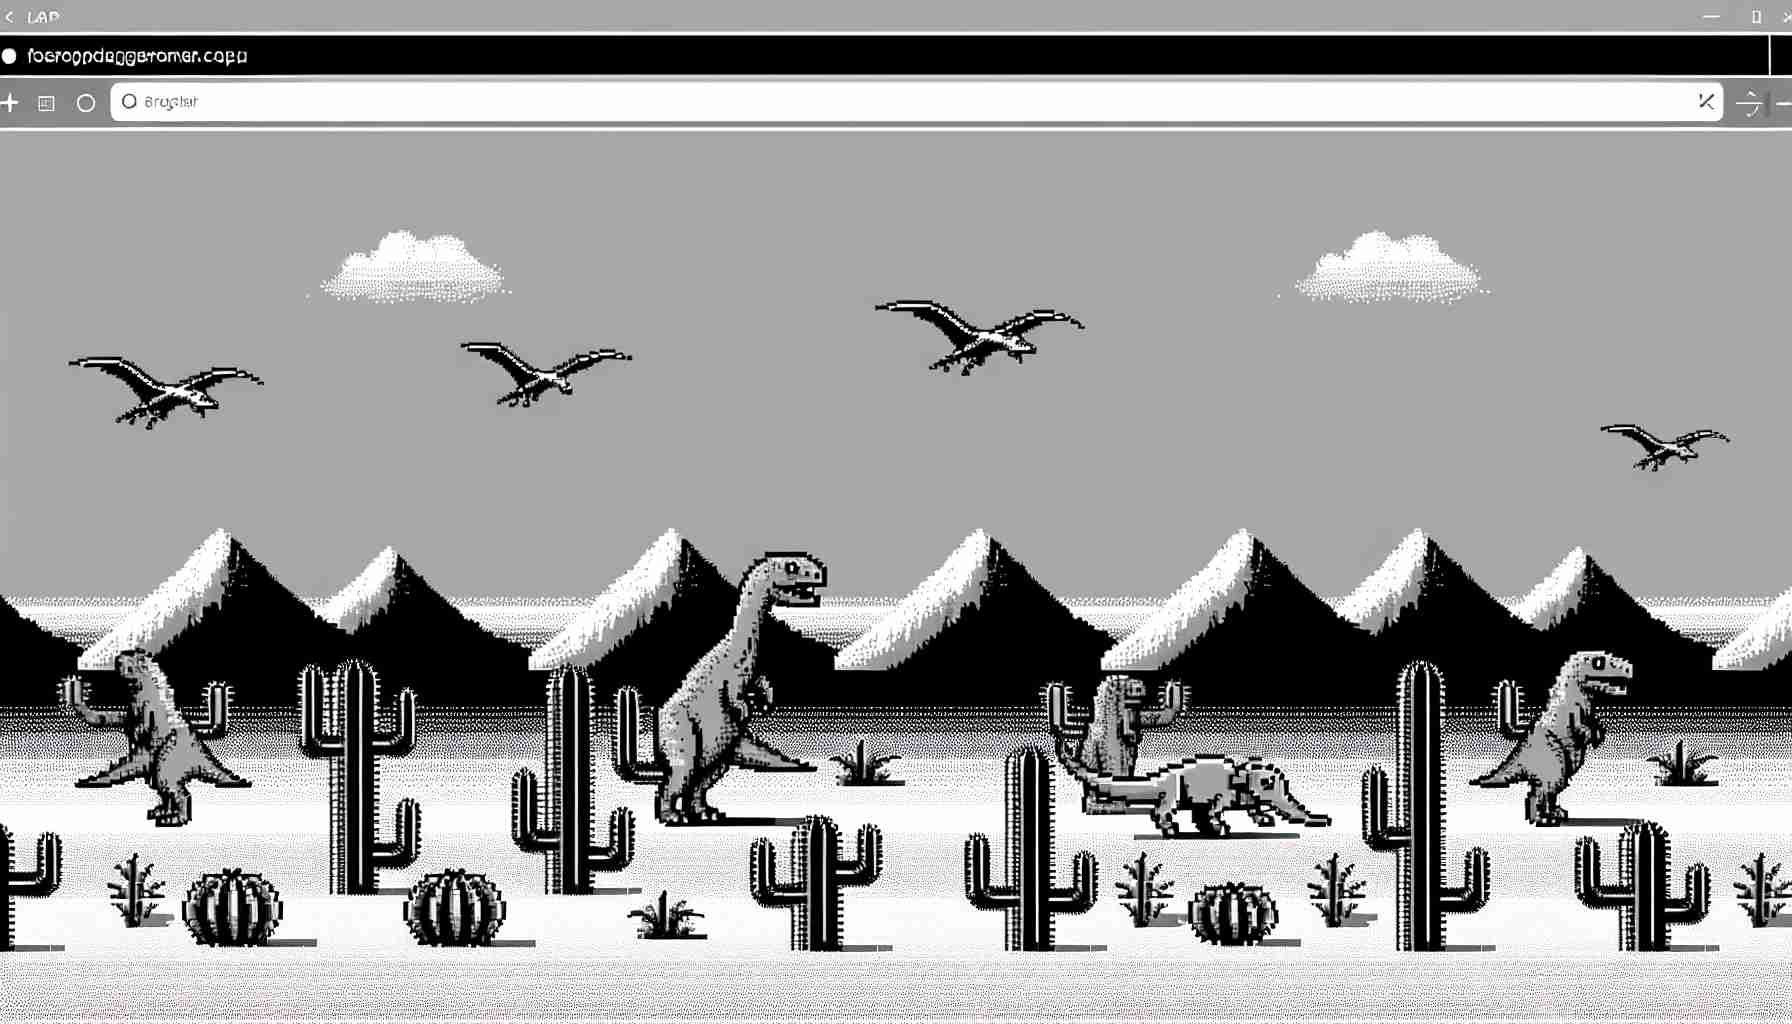 Google Chrome Dinosaur Game [Bird Update] BEST SCORE OF THE WORLD